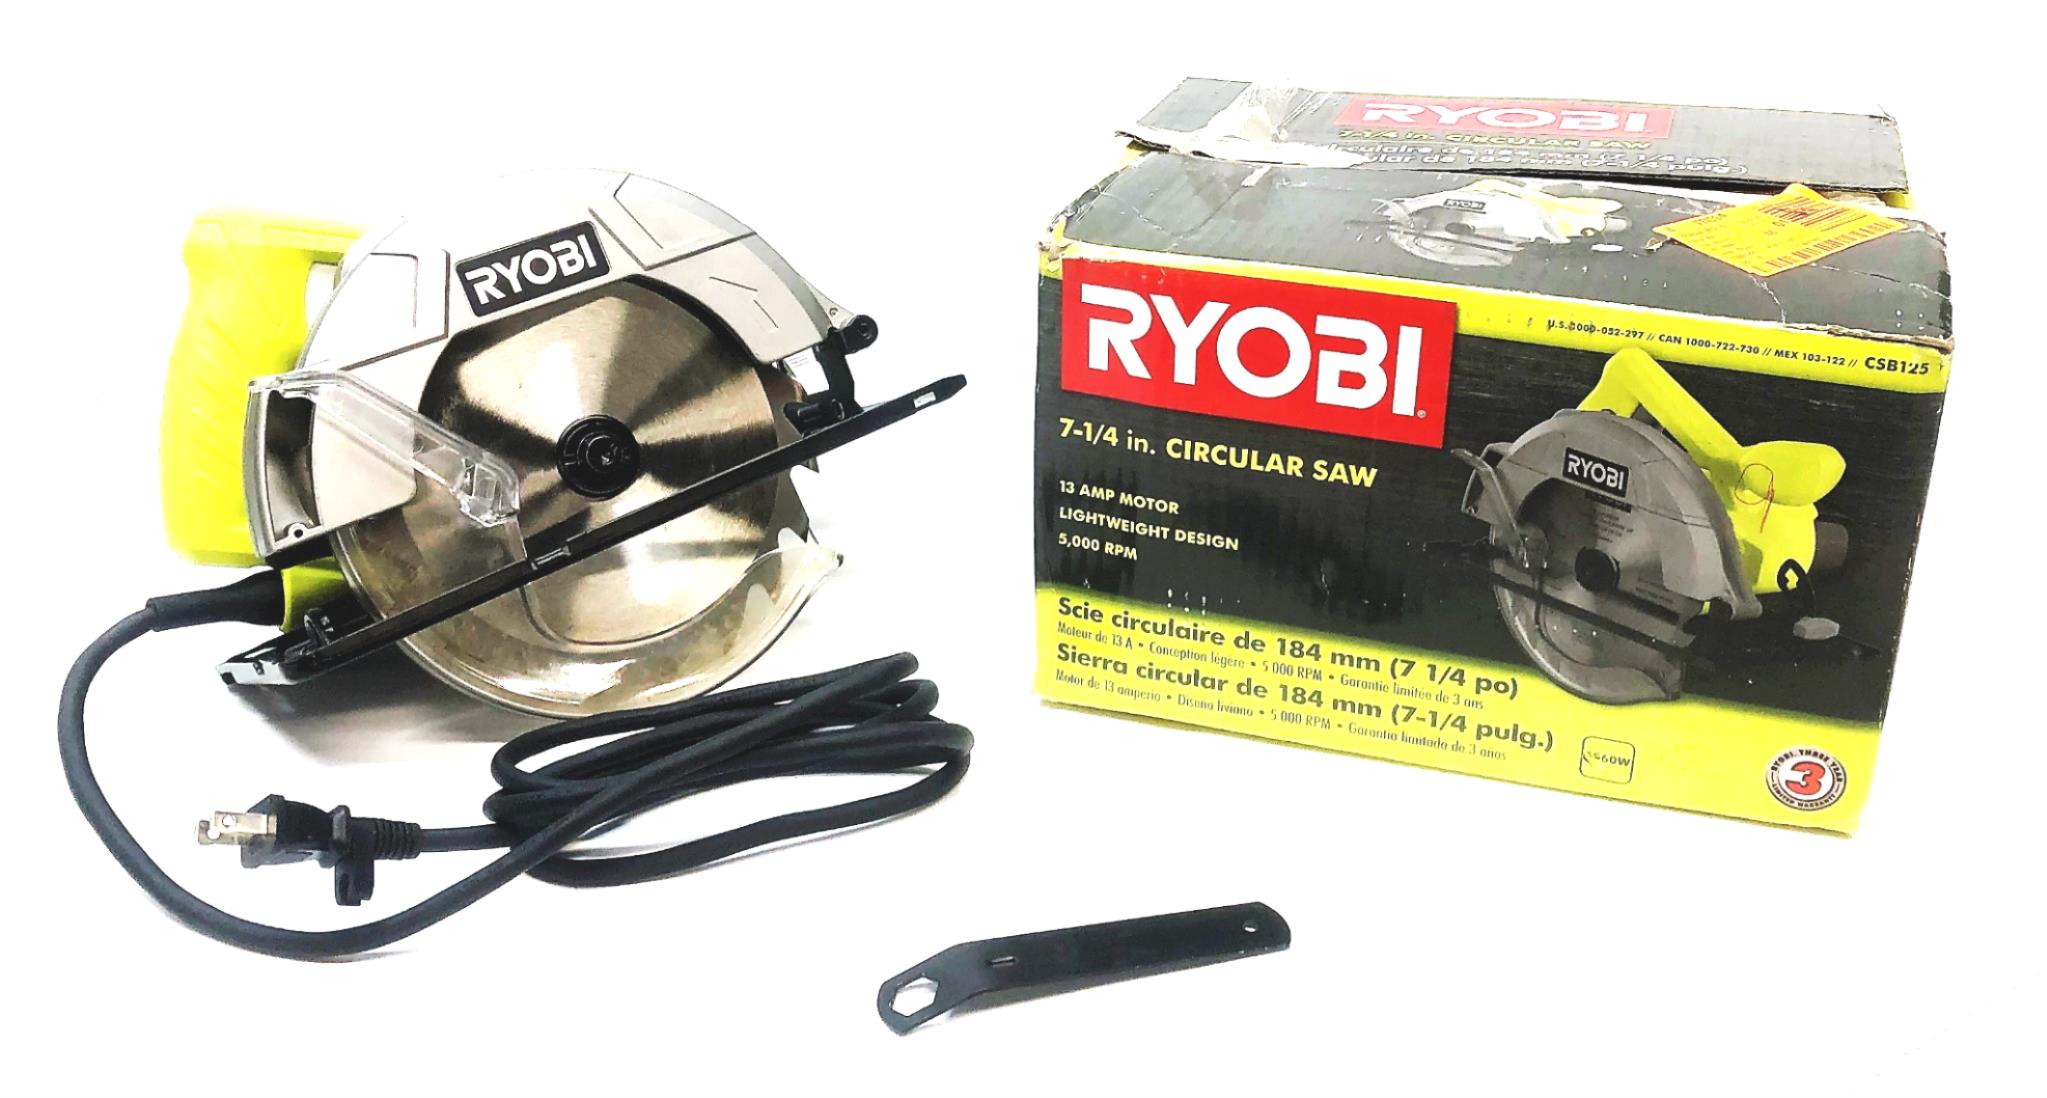 Ryobi 7-1/4 Inch 13AMP Motor 5000RPM Circular Saw With Blade CSB125 US – 